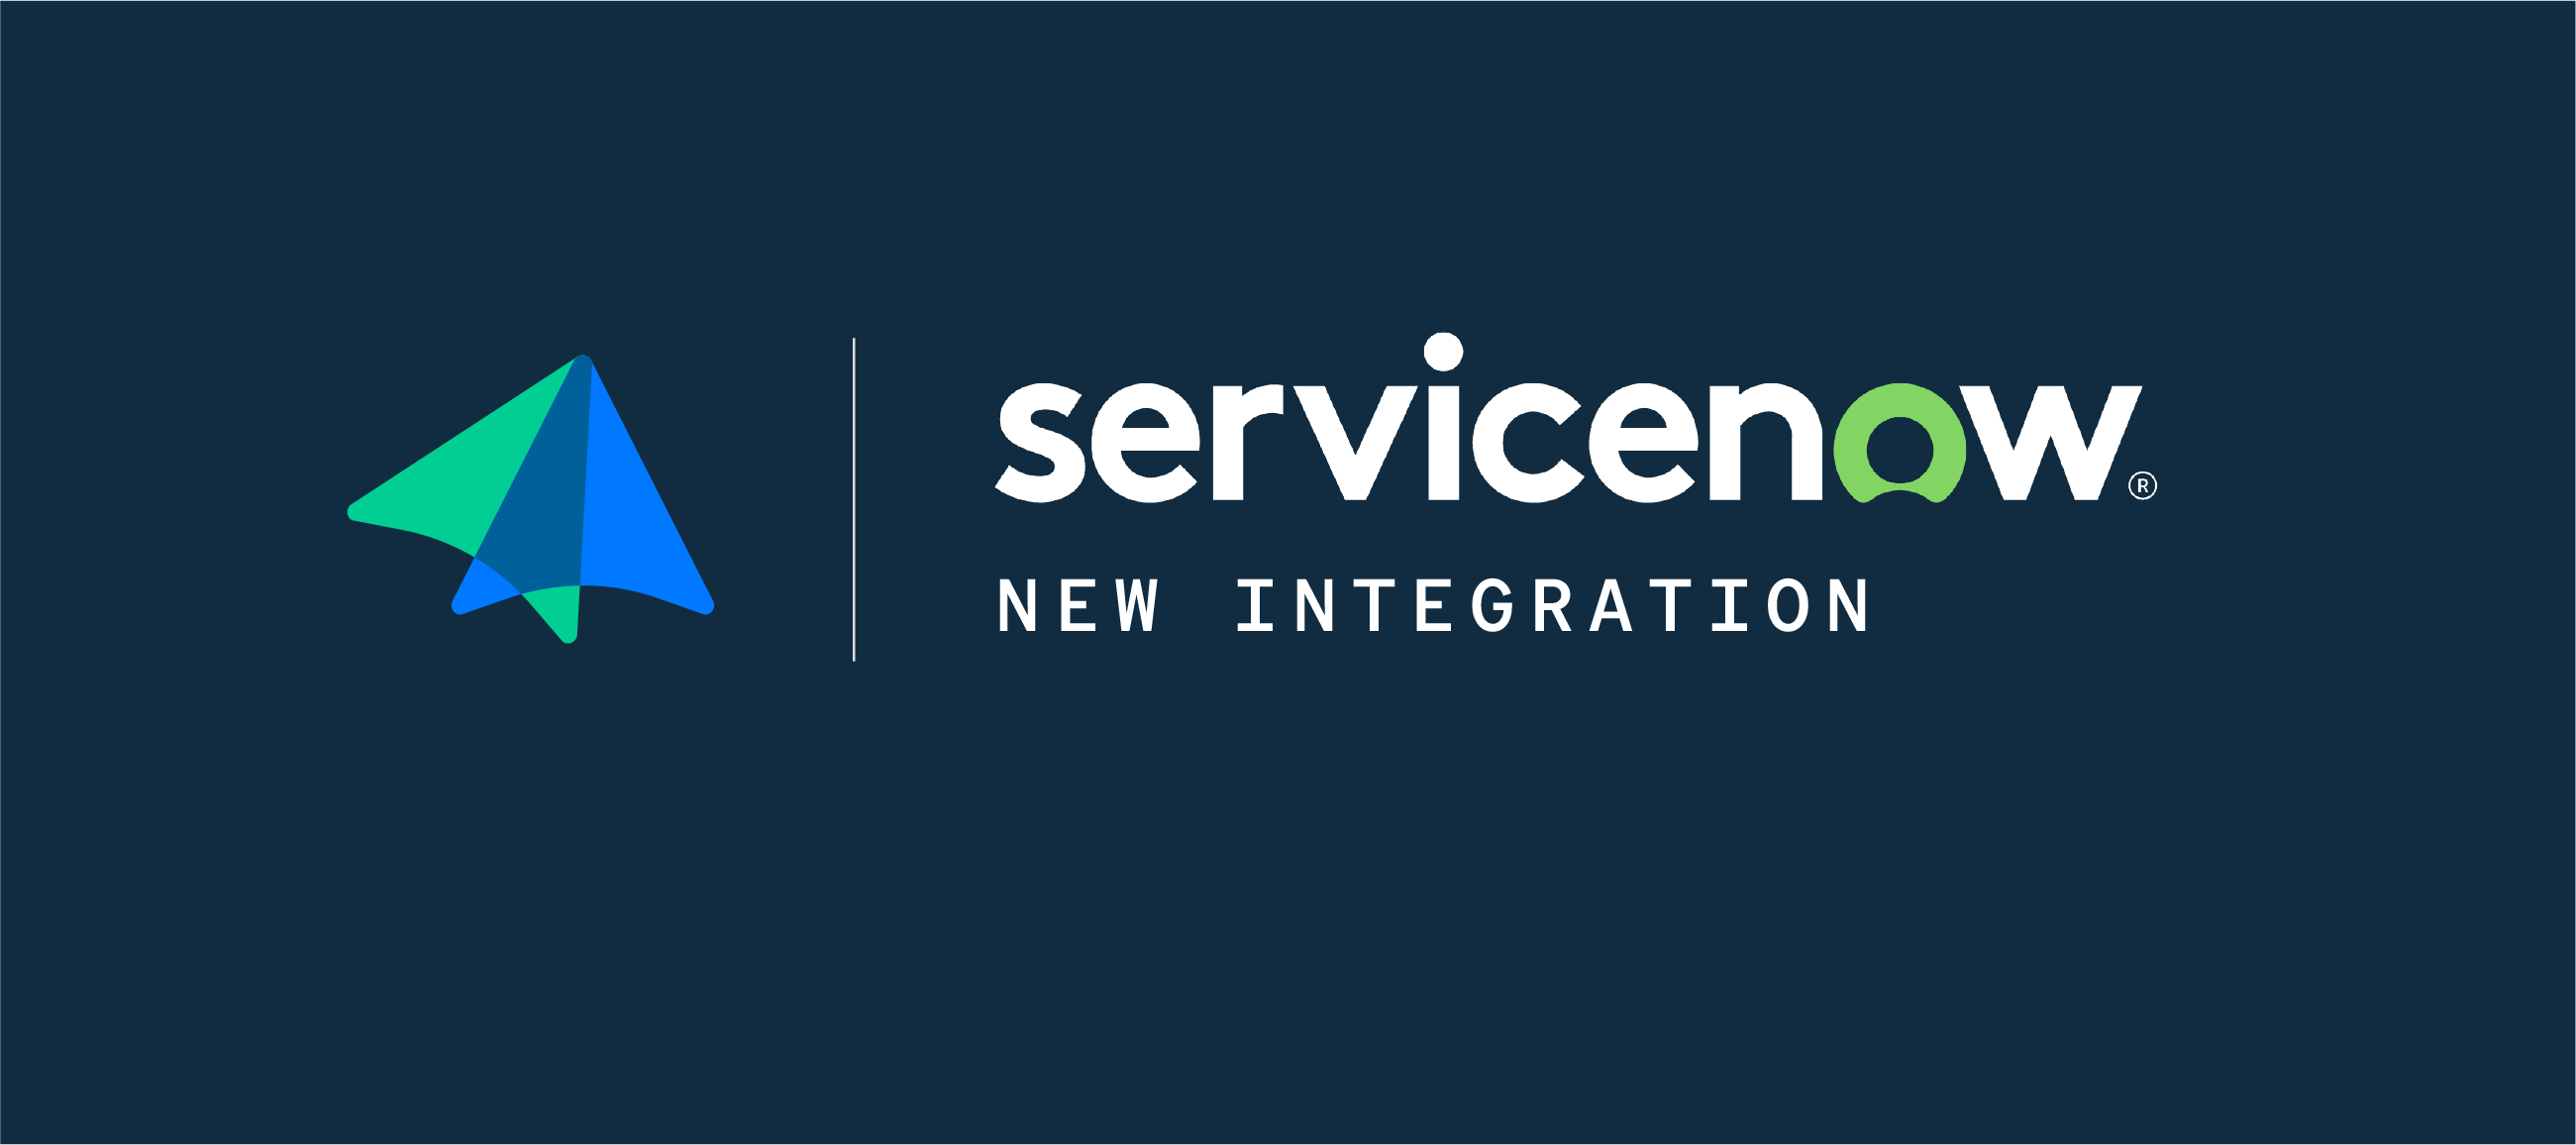 Logik.io Announces Integration with ServiceNow to Power End-to-End Revenue Management